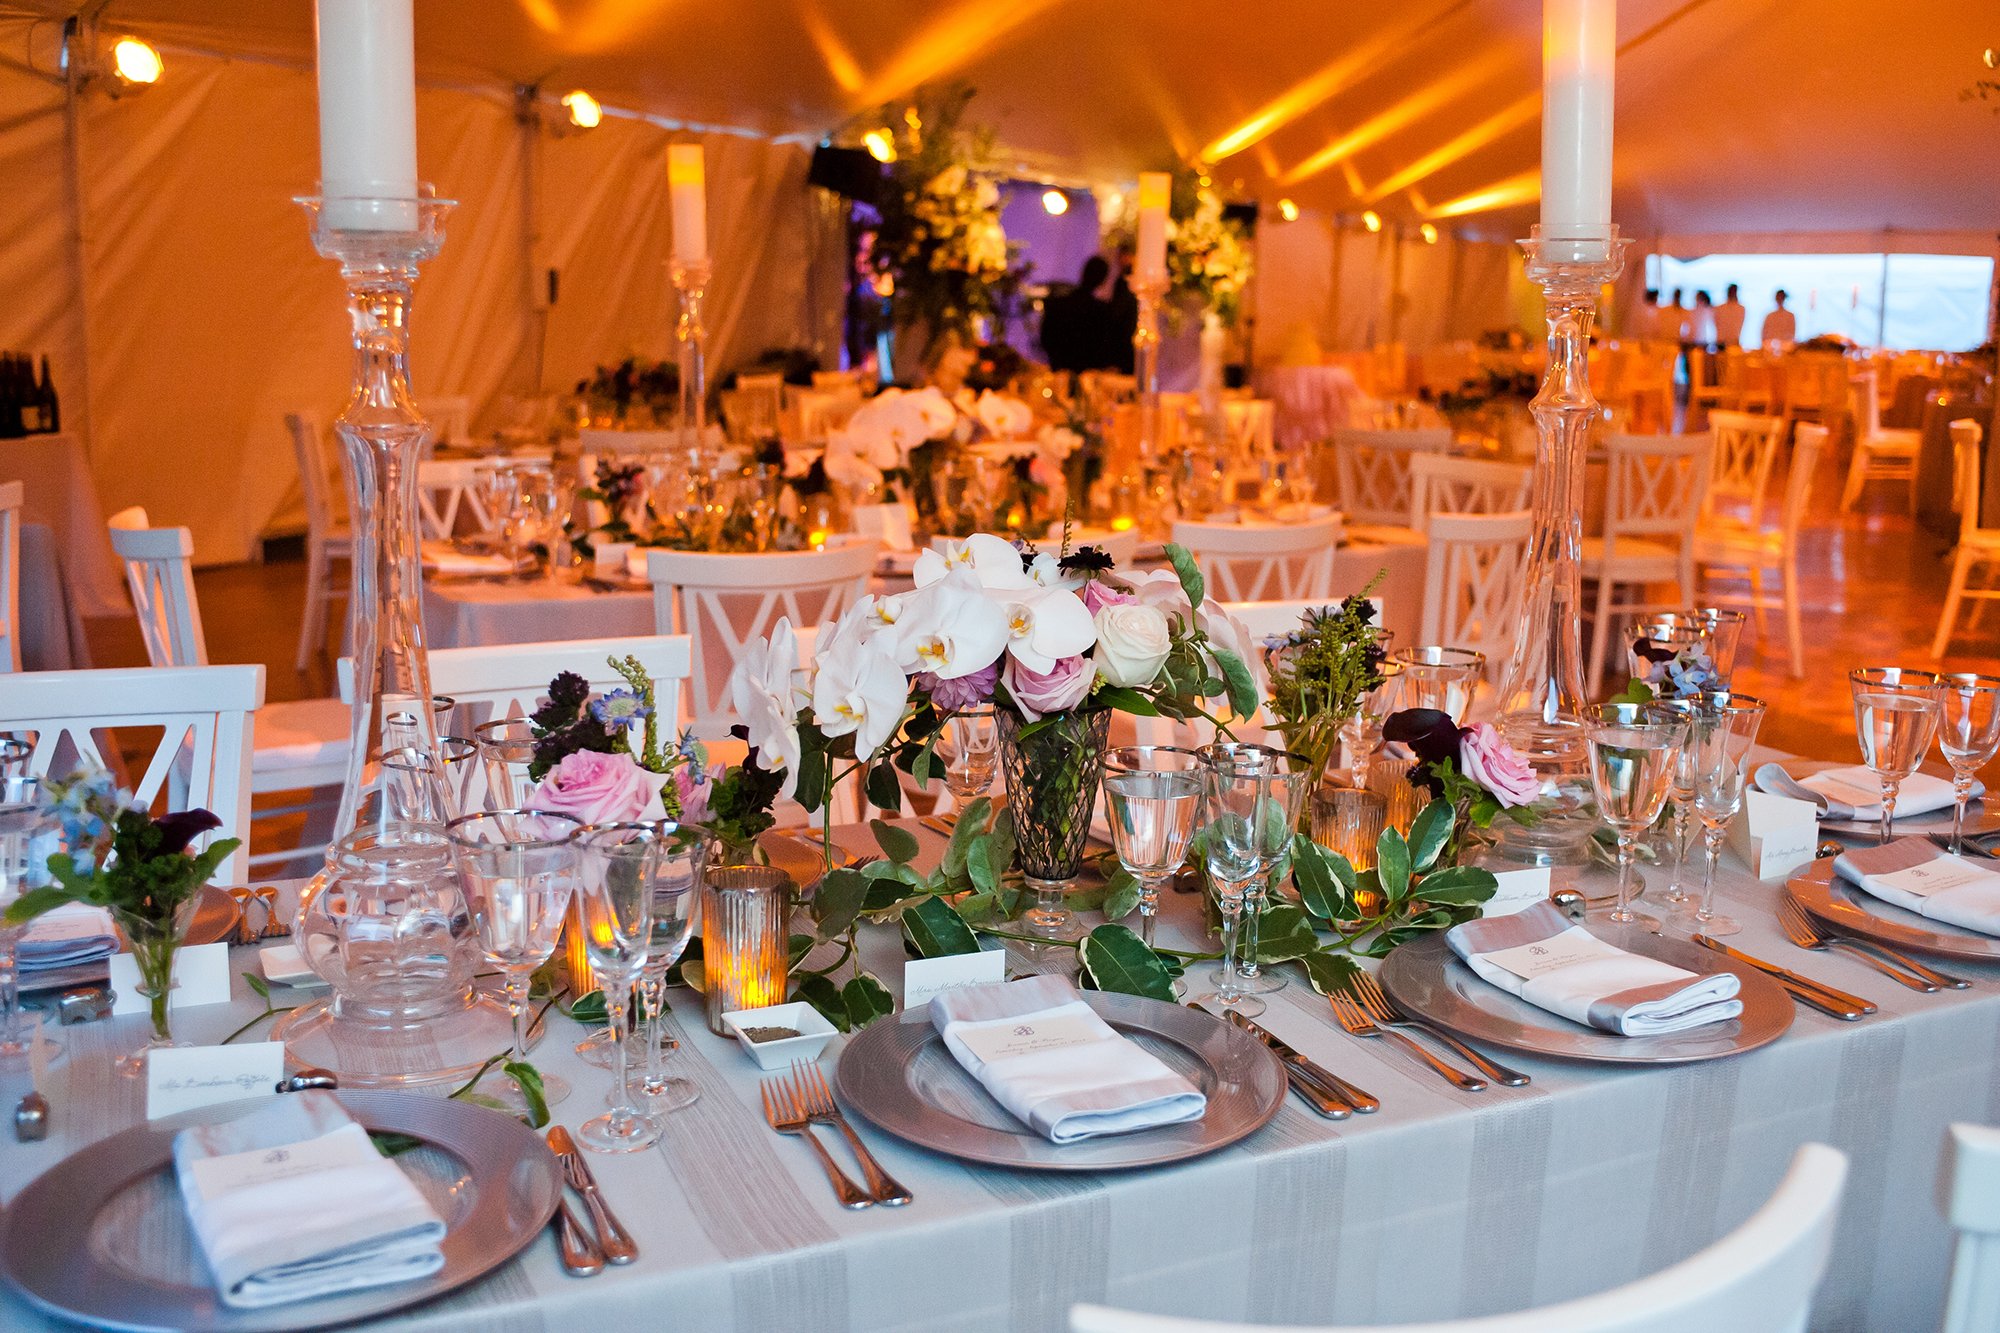 06_Brandegee+Estate+Wedding+Table+Details_AE+Events.jpg